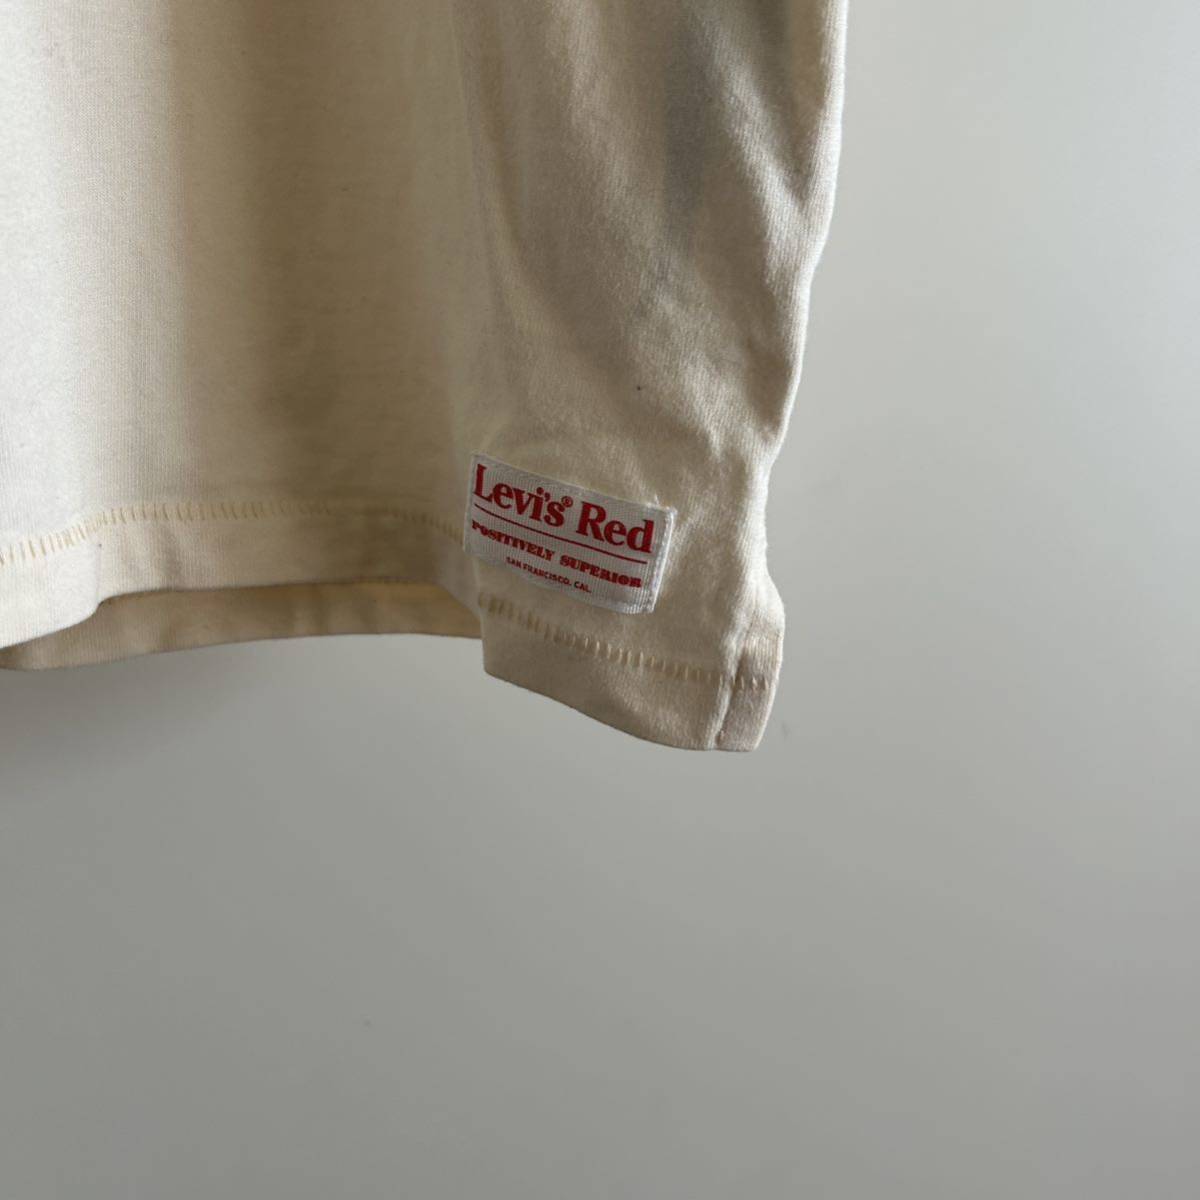 LEVI'S RED リーバイスレッド ロゴ Tシャツ L 袖裾シングル チェーン刺繍 オフホワイト PC9-A0192-0000 大きめ_画像5